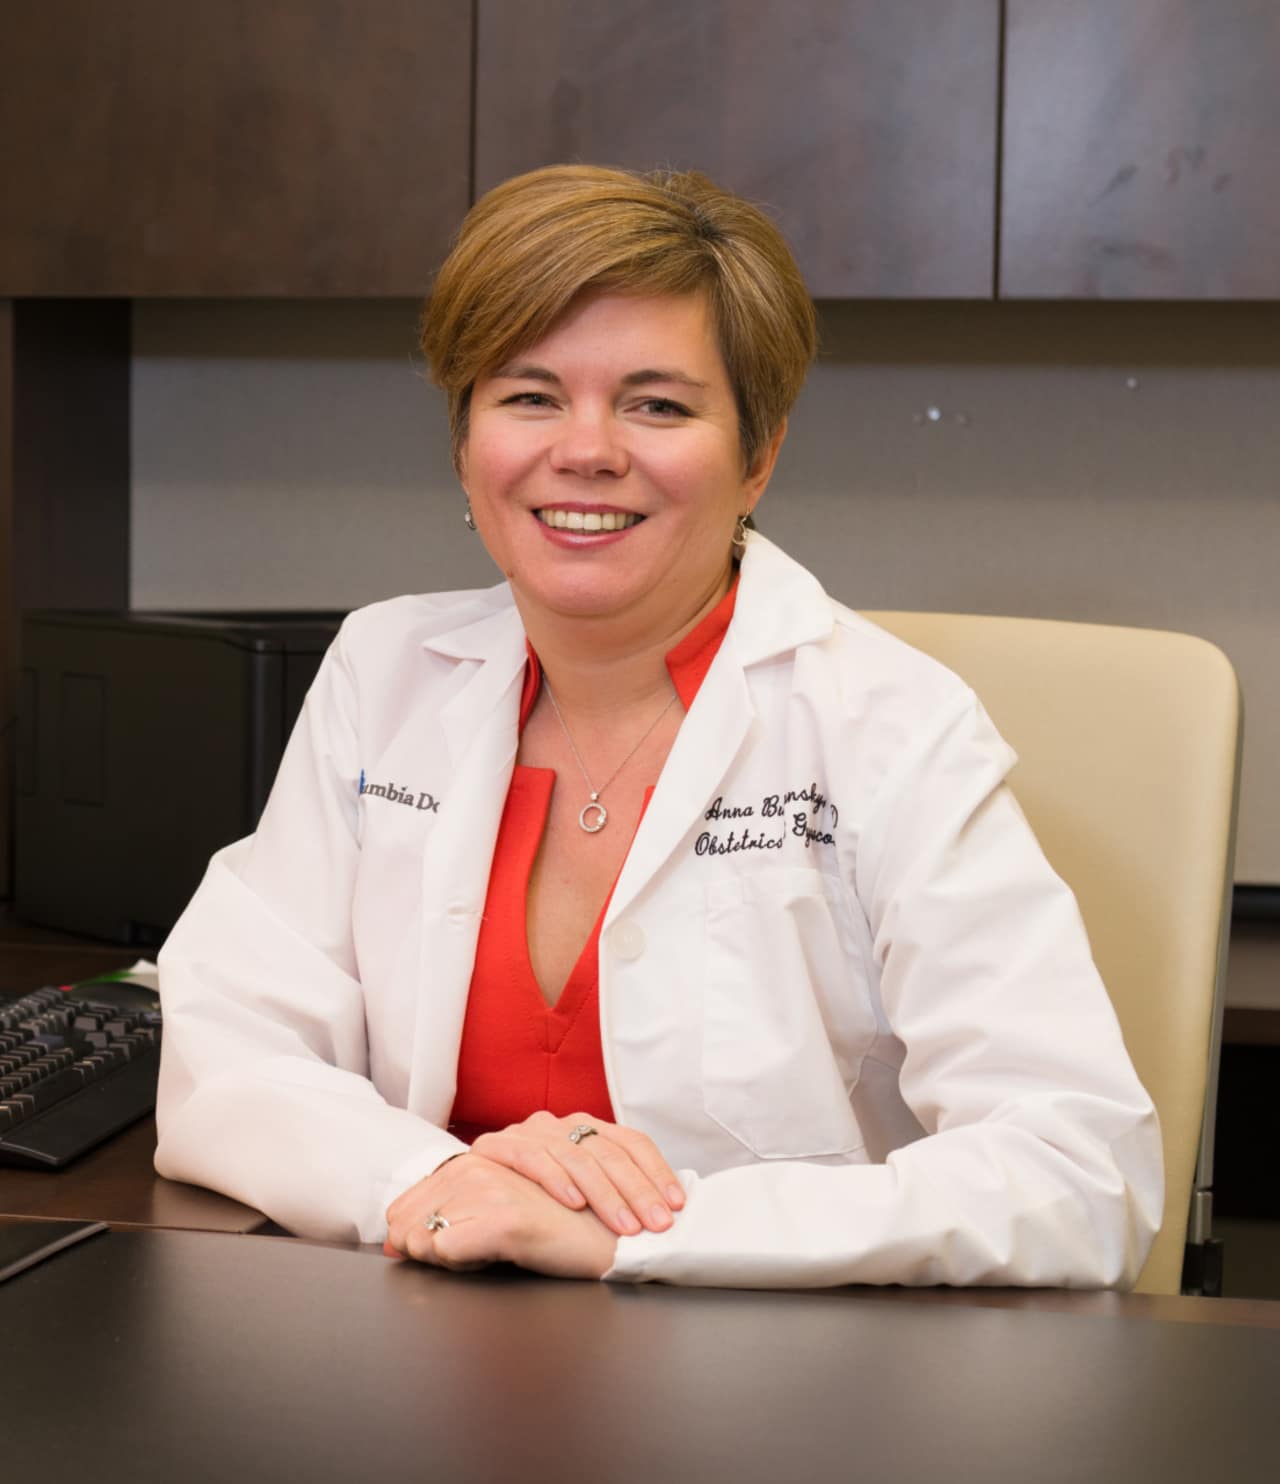 Dr. Anna Burgansky, Assistant Professor of Obstetrics & Gynecology at Columbia University Medical Center.